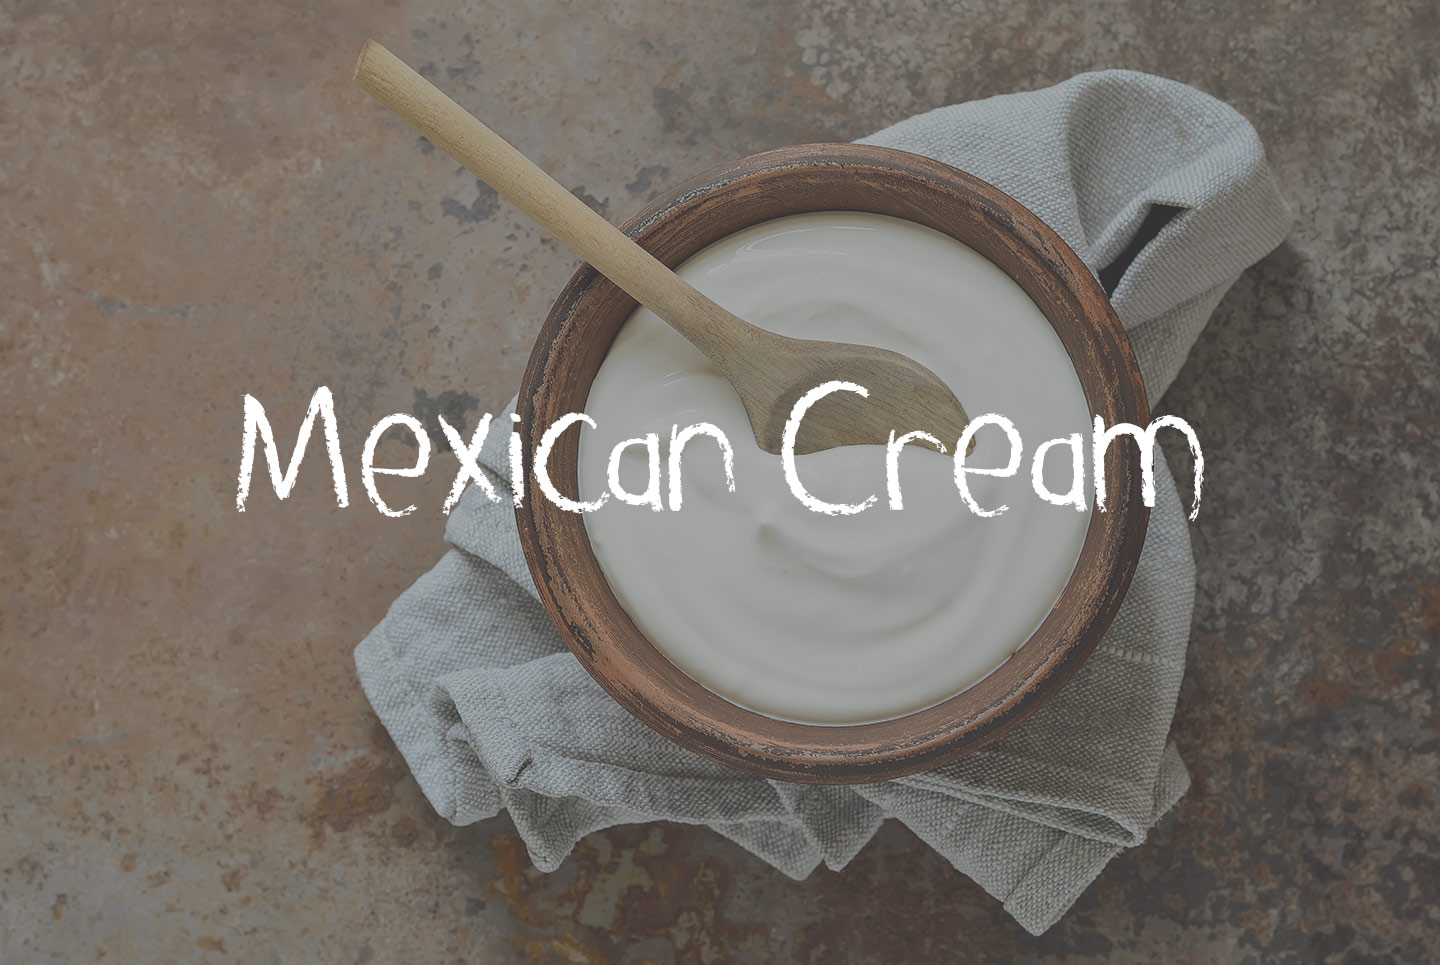 Cacique Table Cream, Crema Mexicana